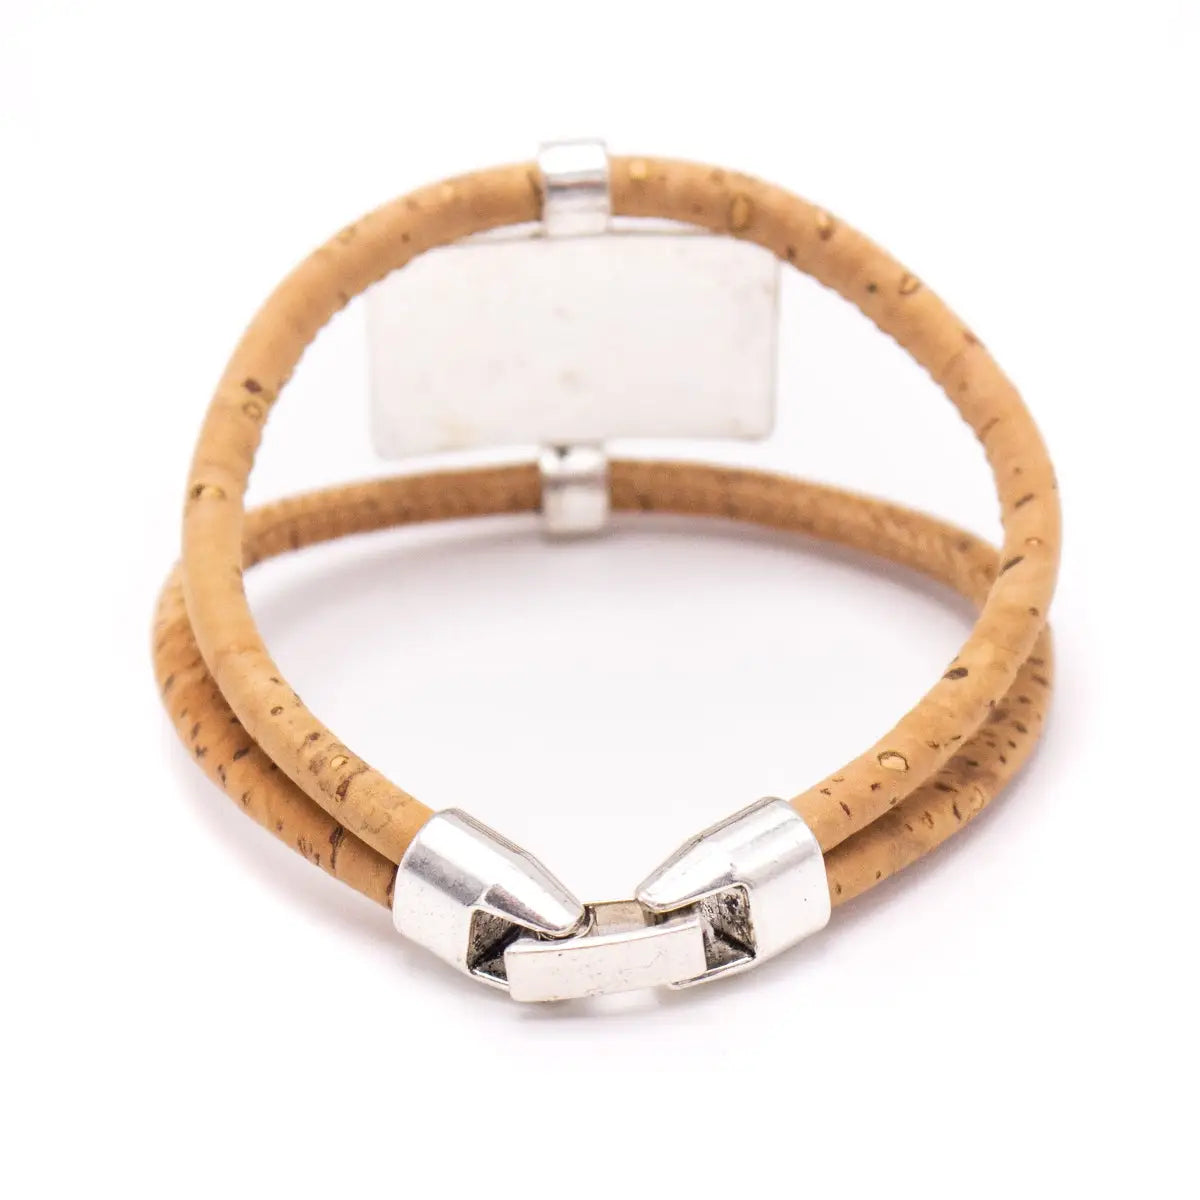 Angelco Accessories rectangle cork bracelet